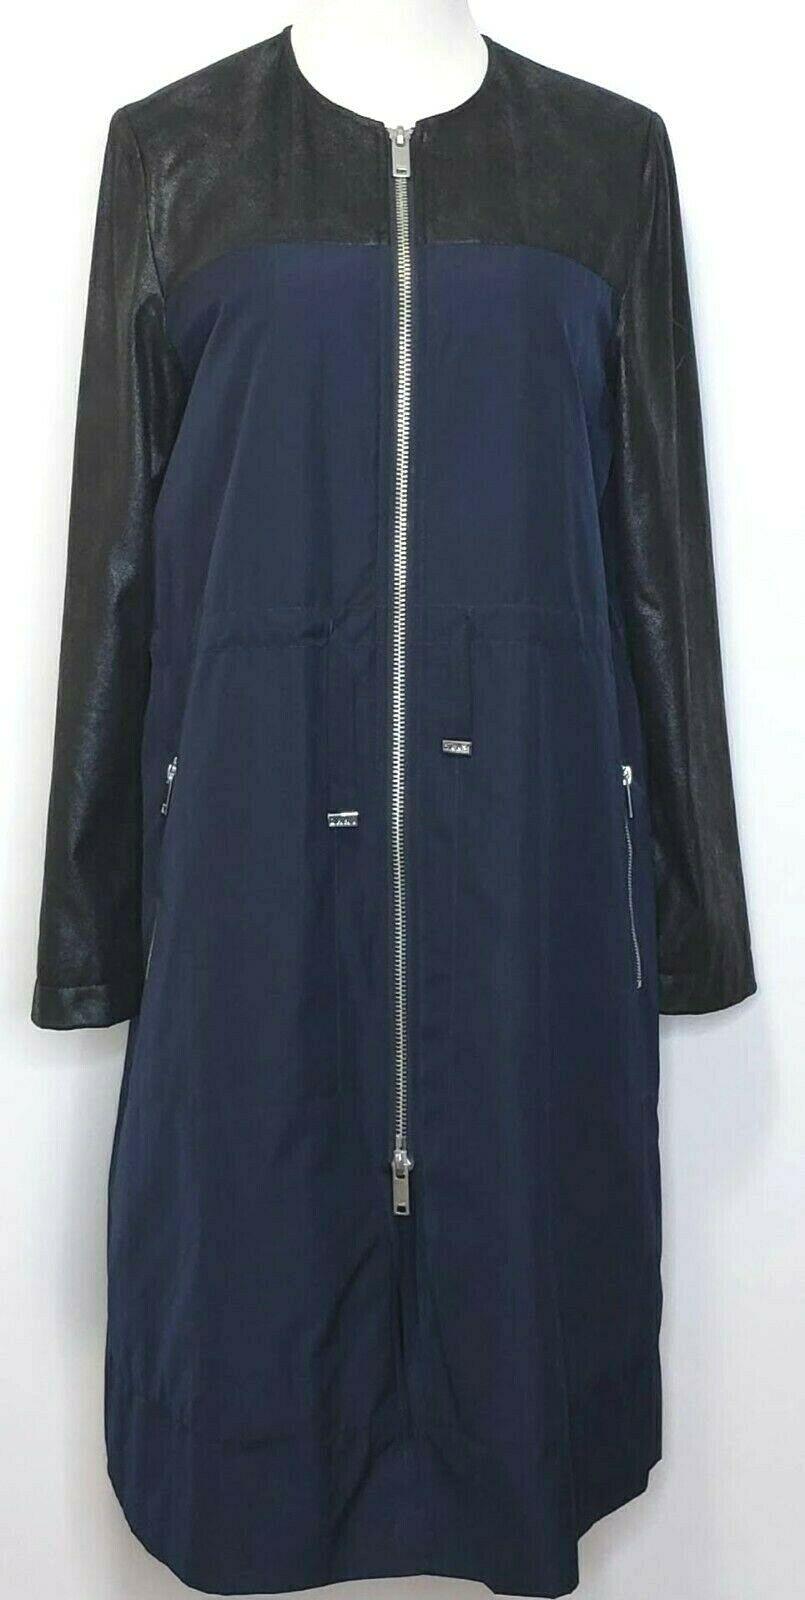 DKNY Women’s Black Faux Leather Sleeves Navy Walker Fashion Long Oversize Coat S - SVNYFancy